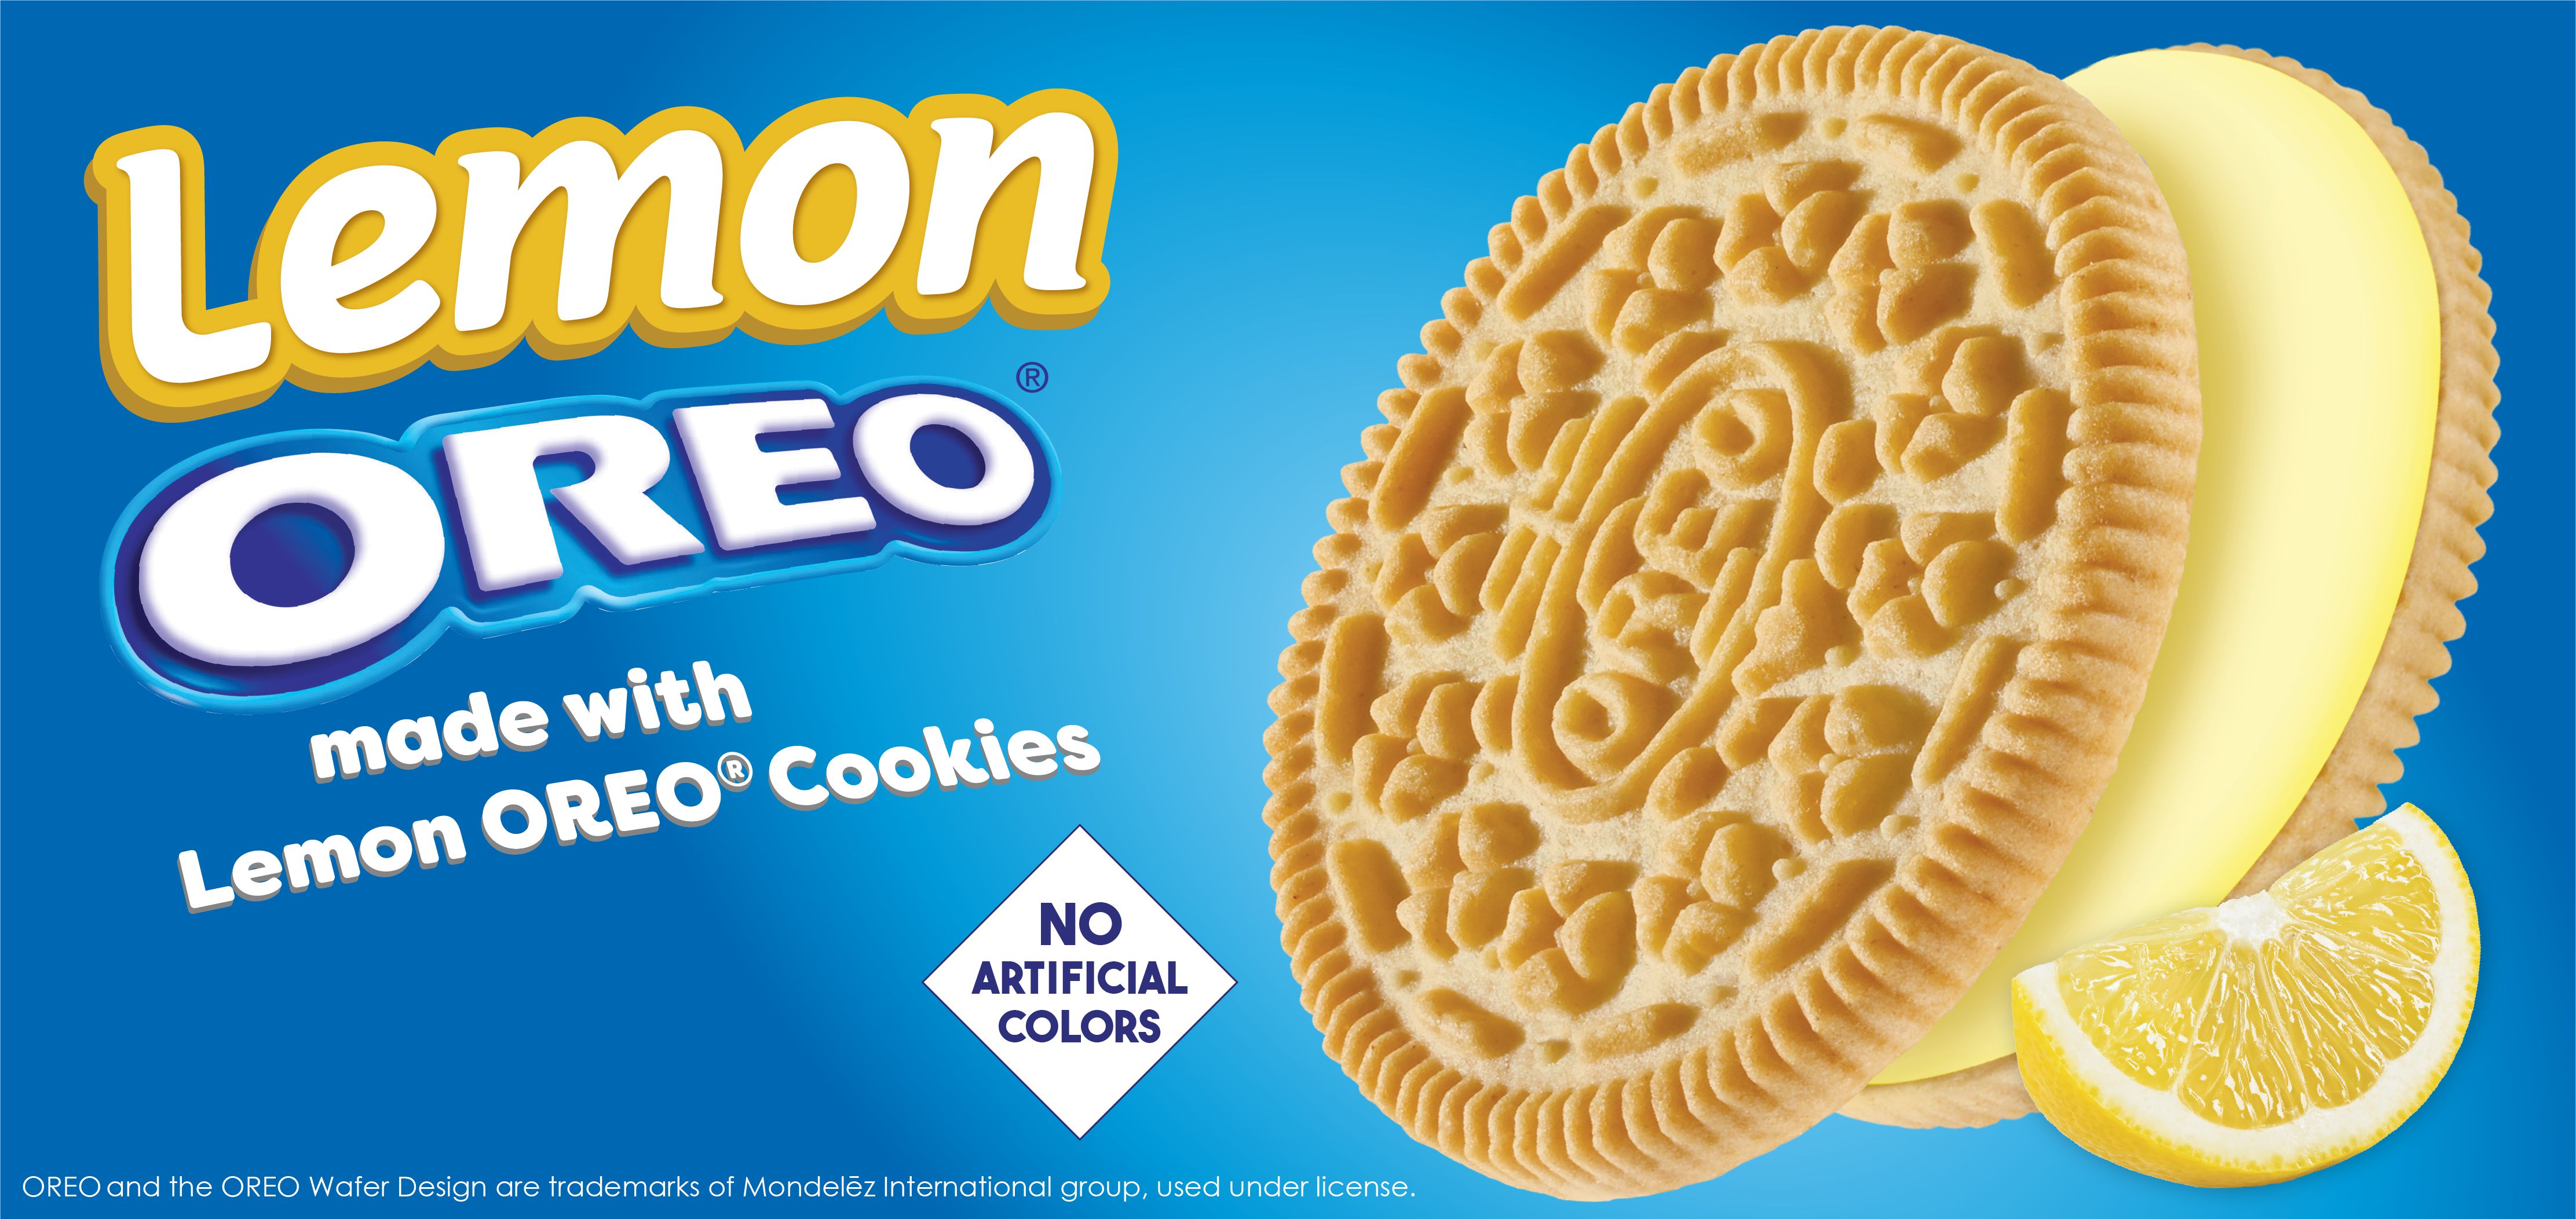 lemon OREO® made with lemon OREO® cookies label image